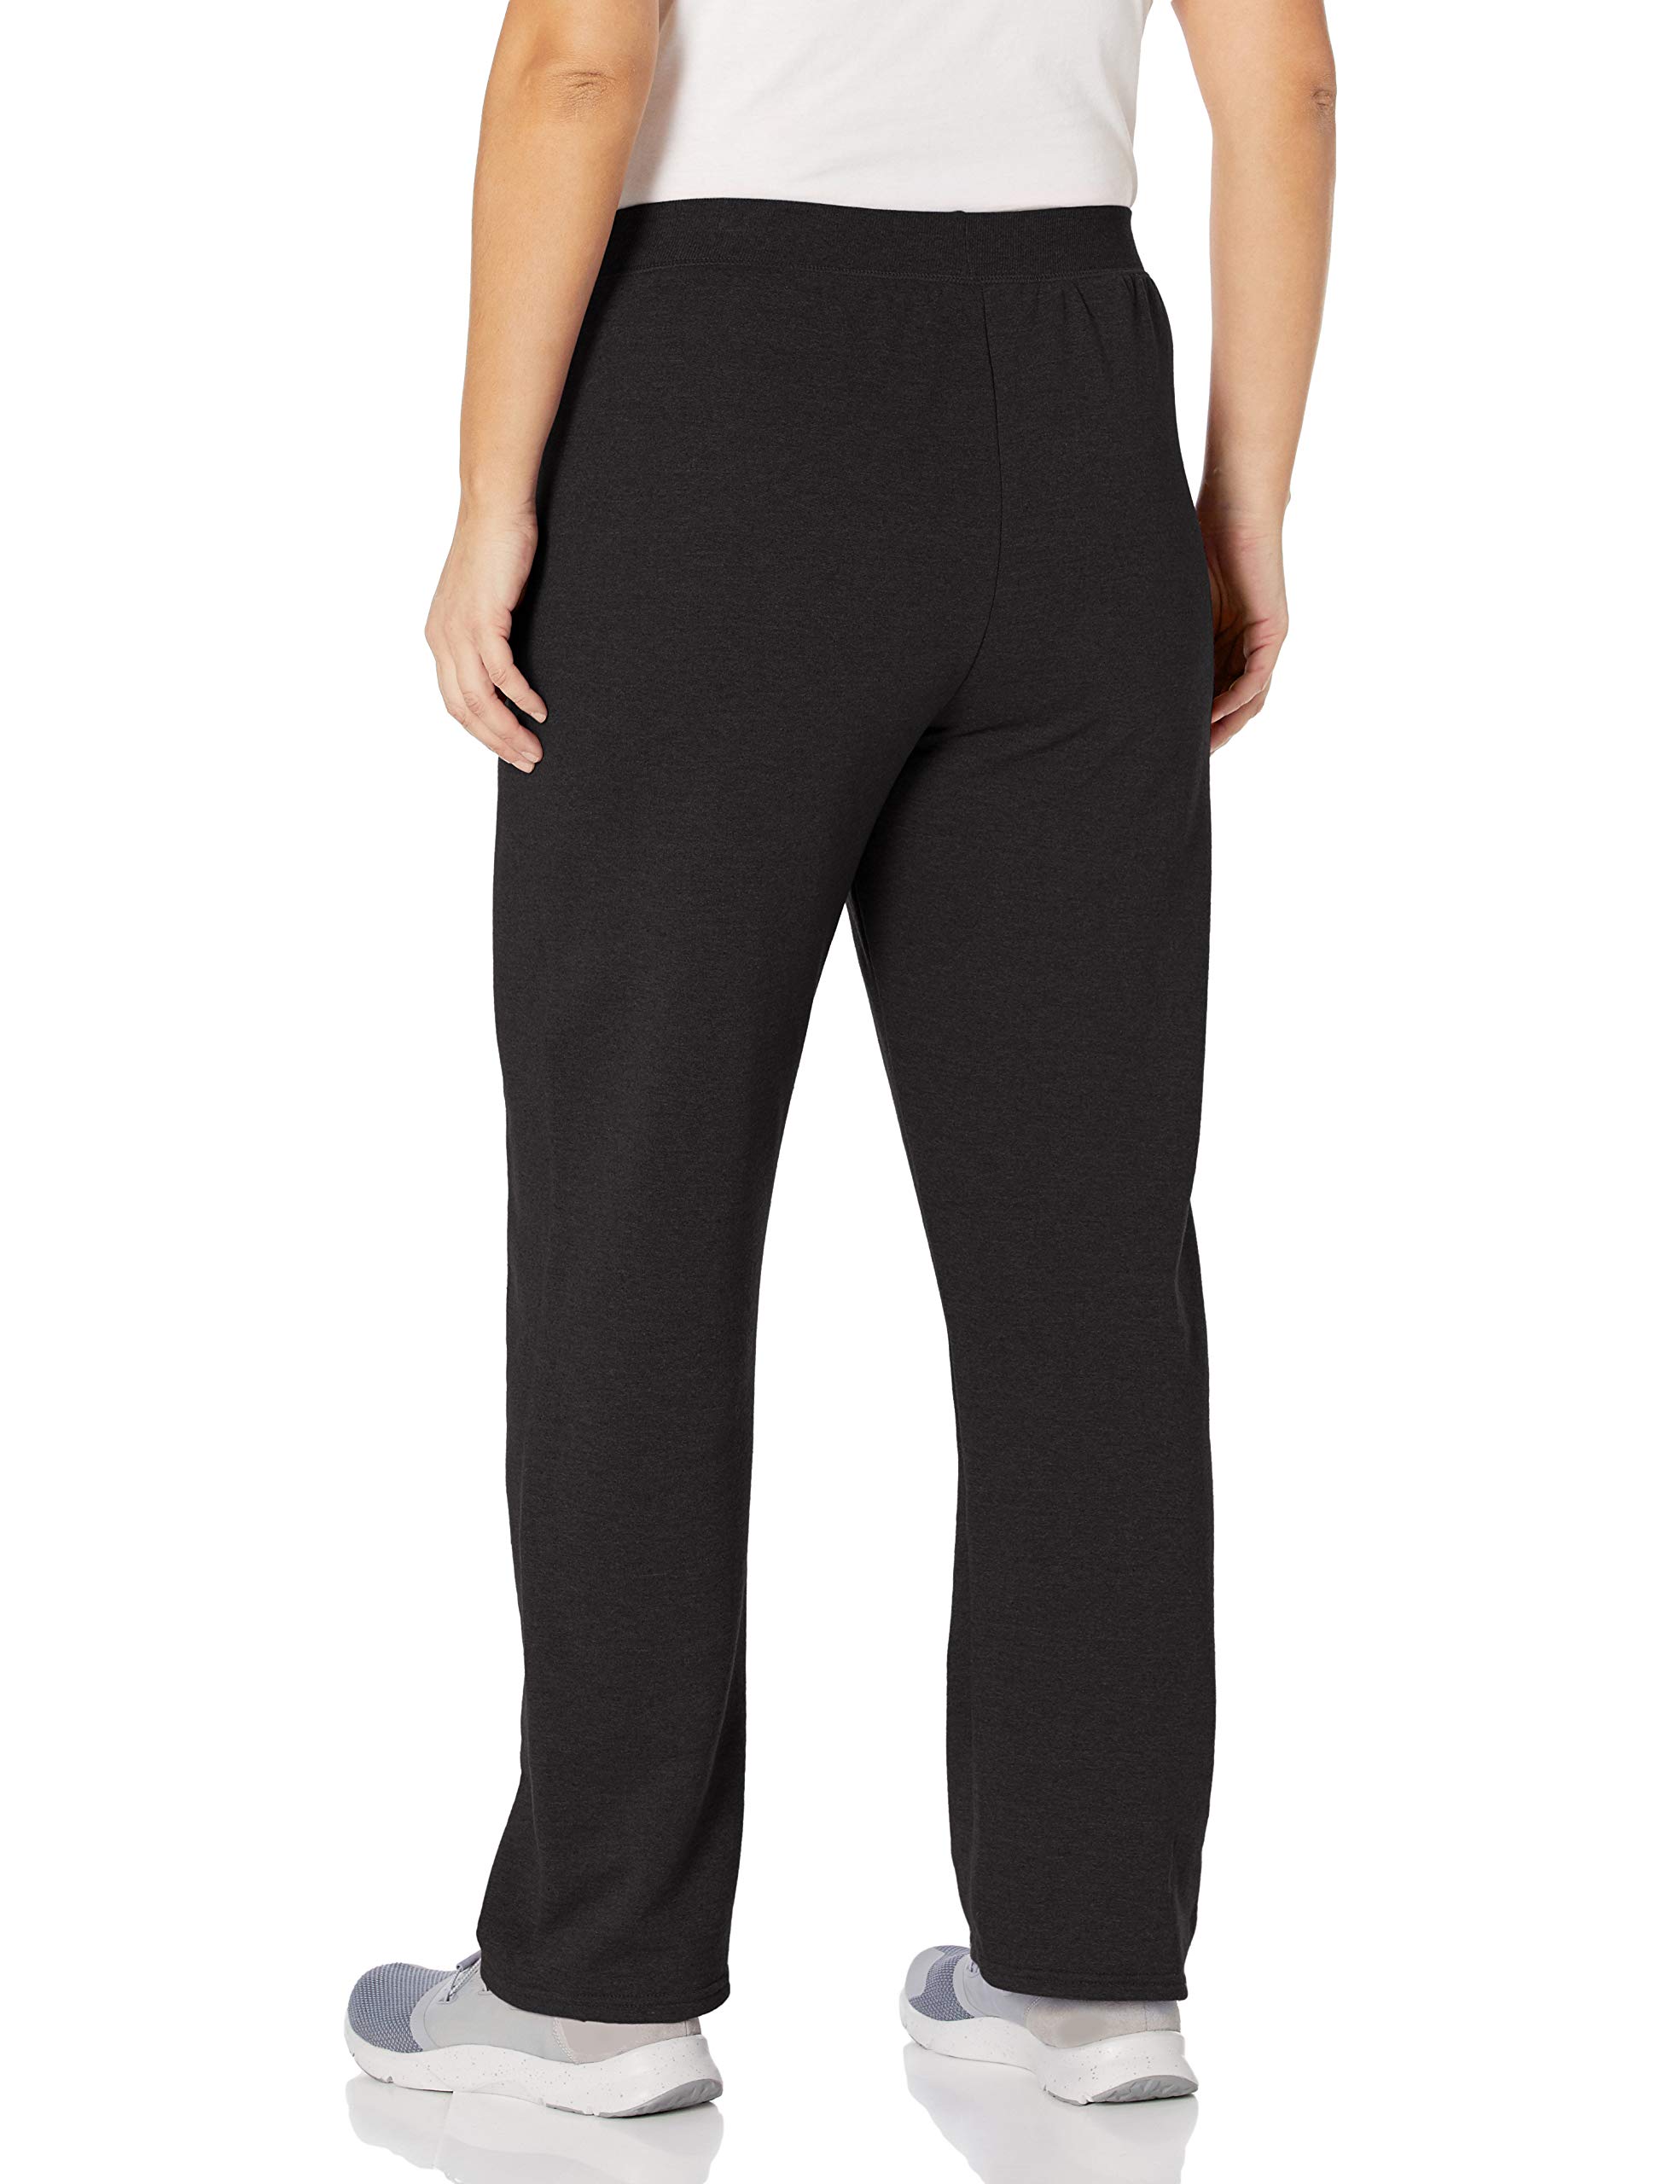 Just My Size Women's Plus Size Eco Smart Sweatpants - Regular Length